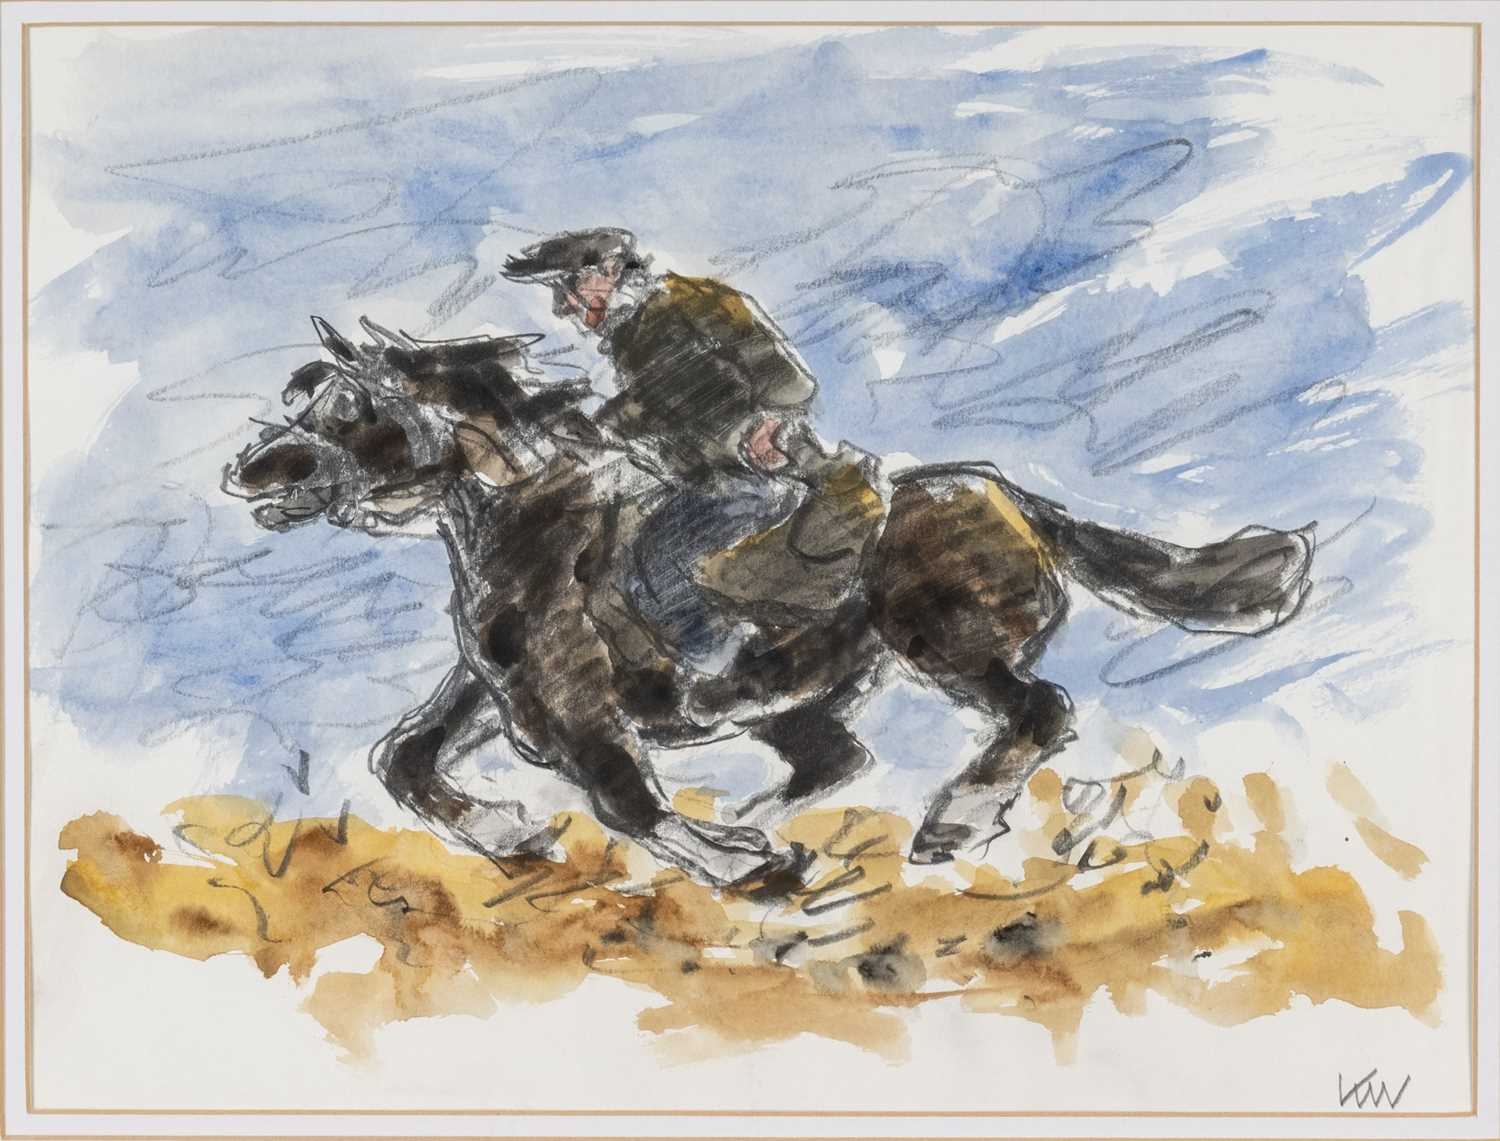 ‡ SIR KYFFIN WILLIAMS RA watercolour and pencil - Patagonian horse and rider at full gallop